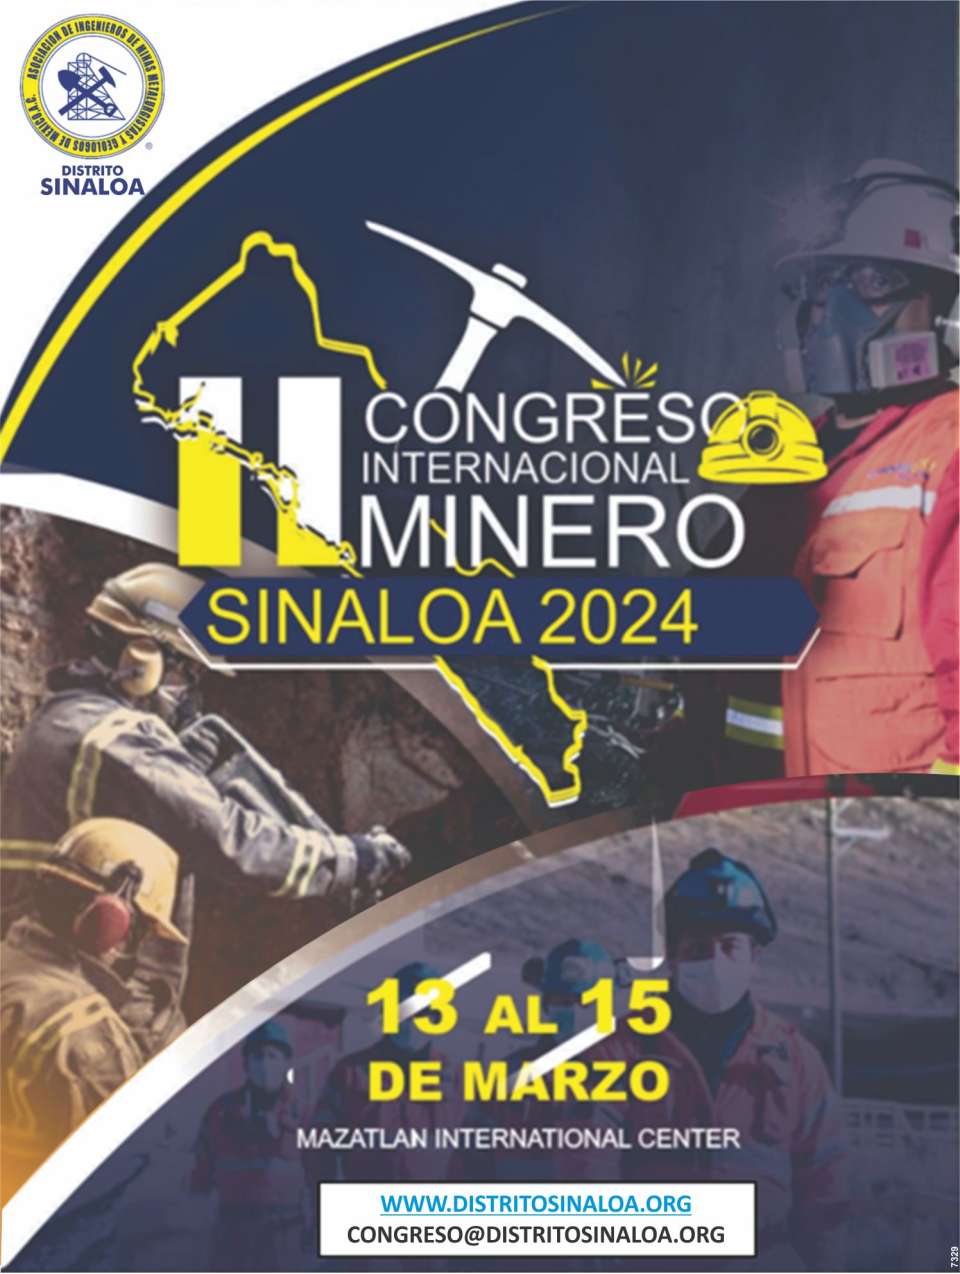 International Mining Convention in Mazatlan, Sinaloa. March 13 to 15, 2024 at the Mazatlan International Center